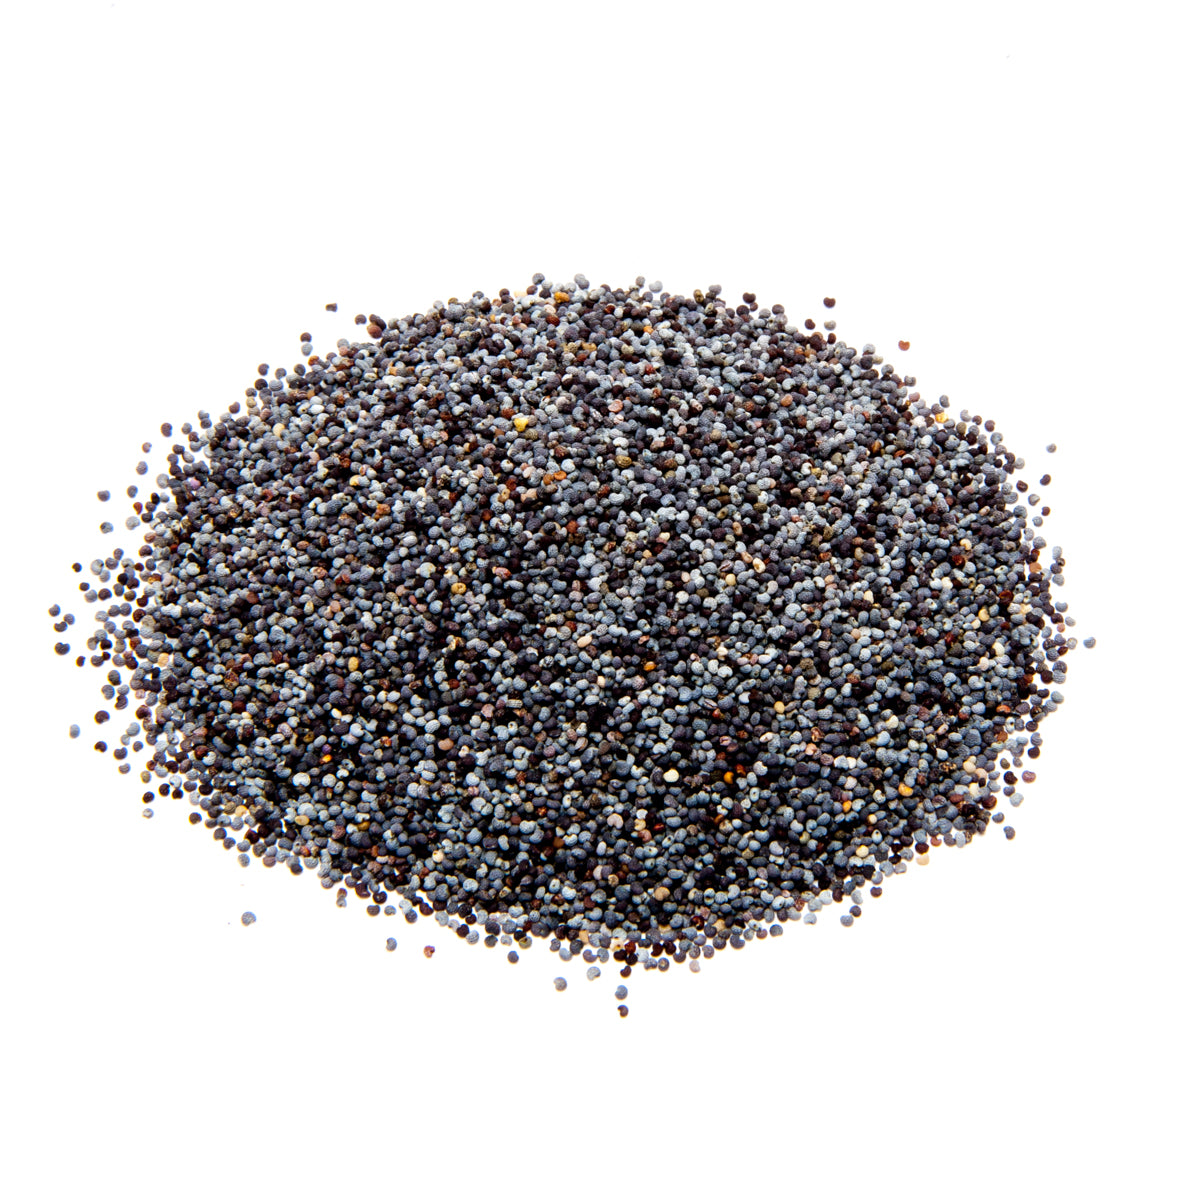 Premium Blue Poppy Seeds NZ, Best PRICE & QUALITY from Premium Spices, showing big heap